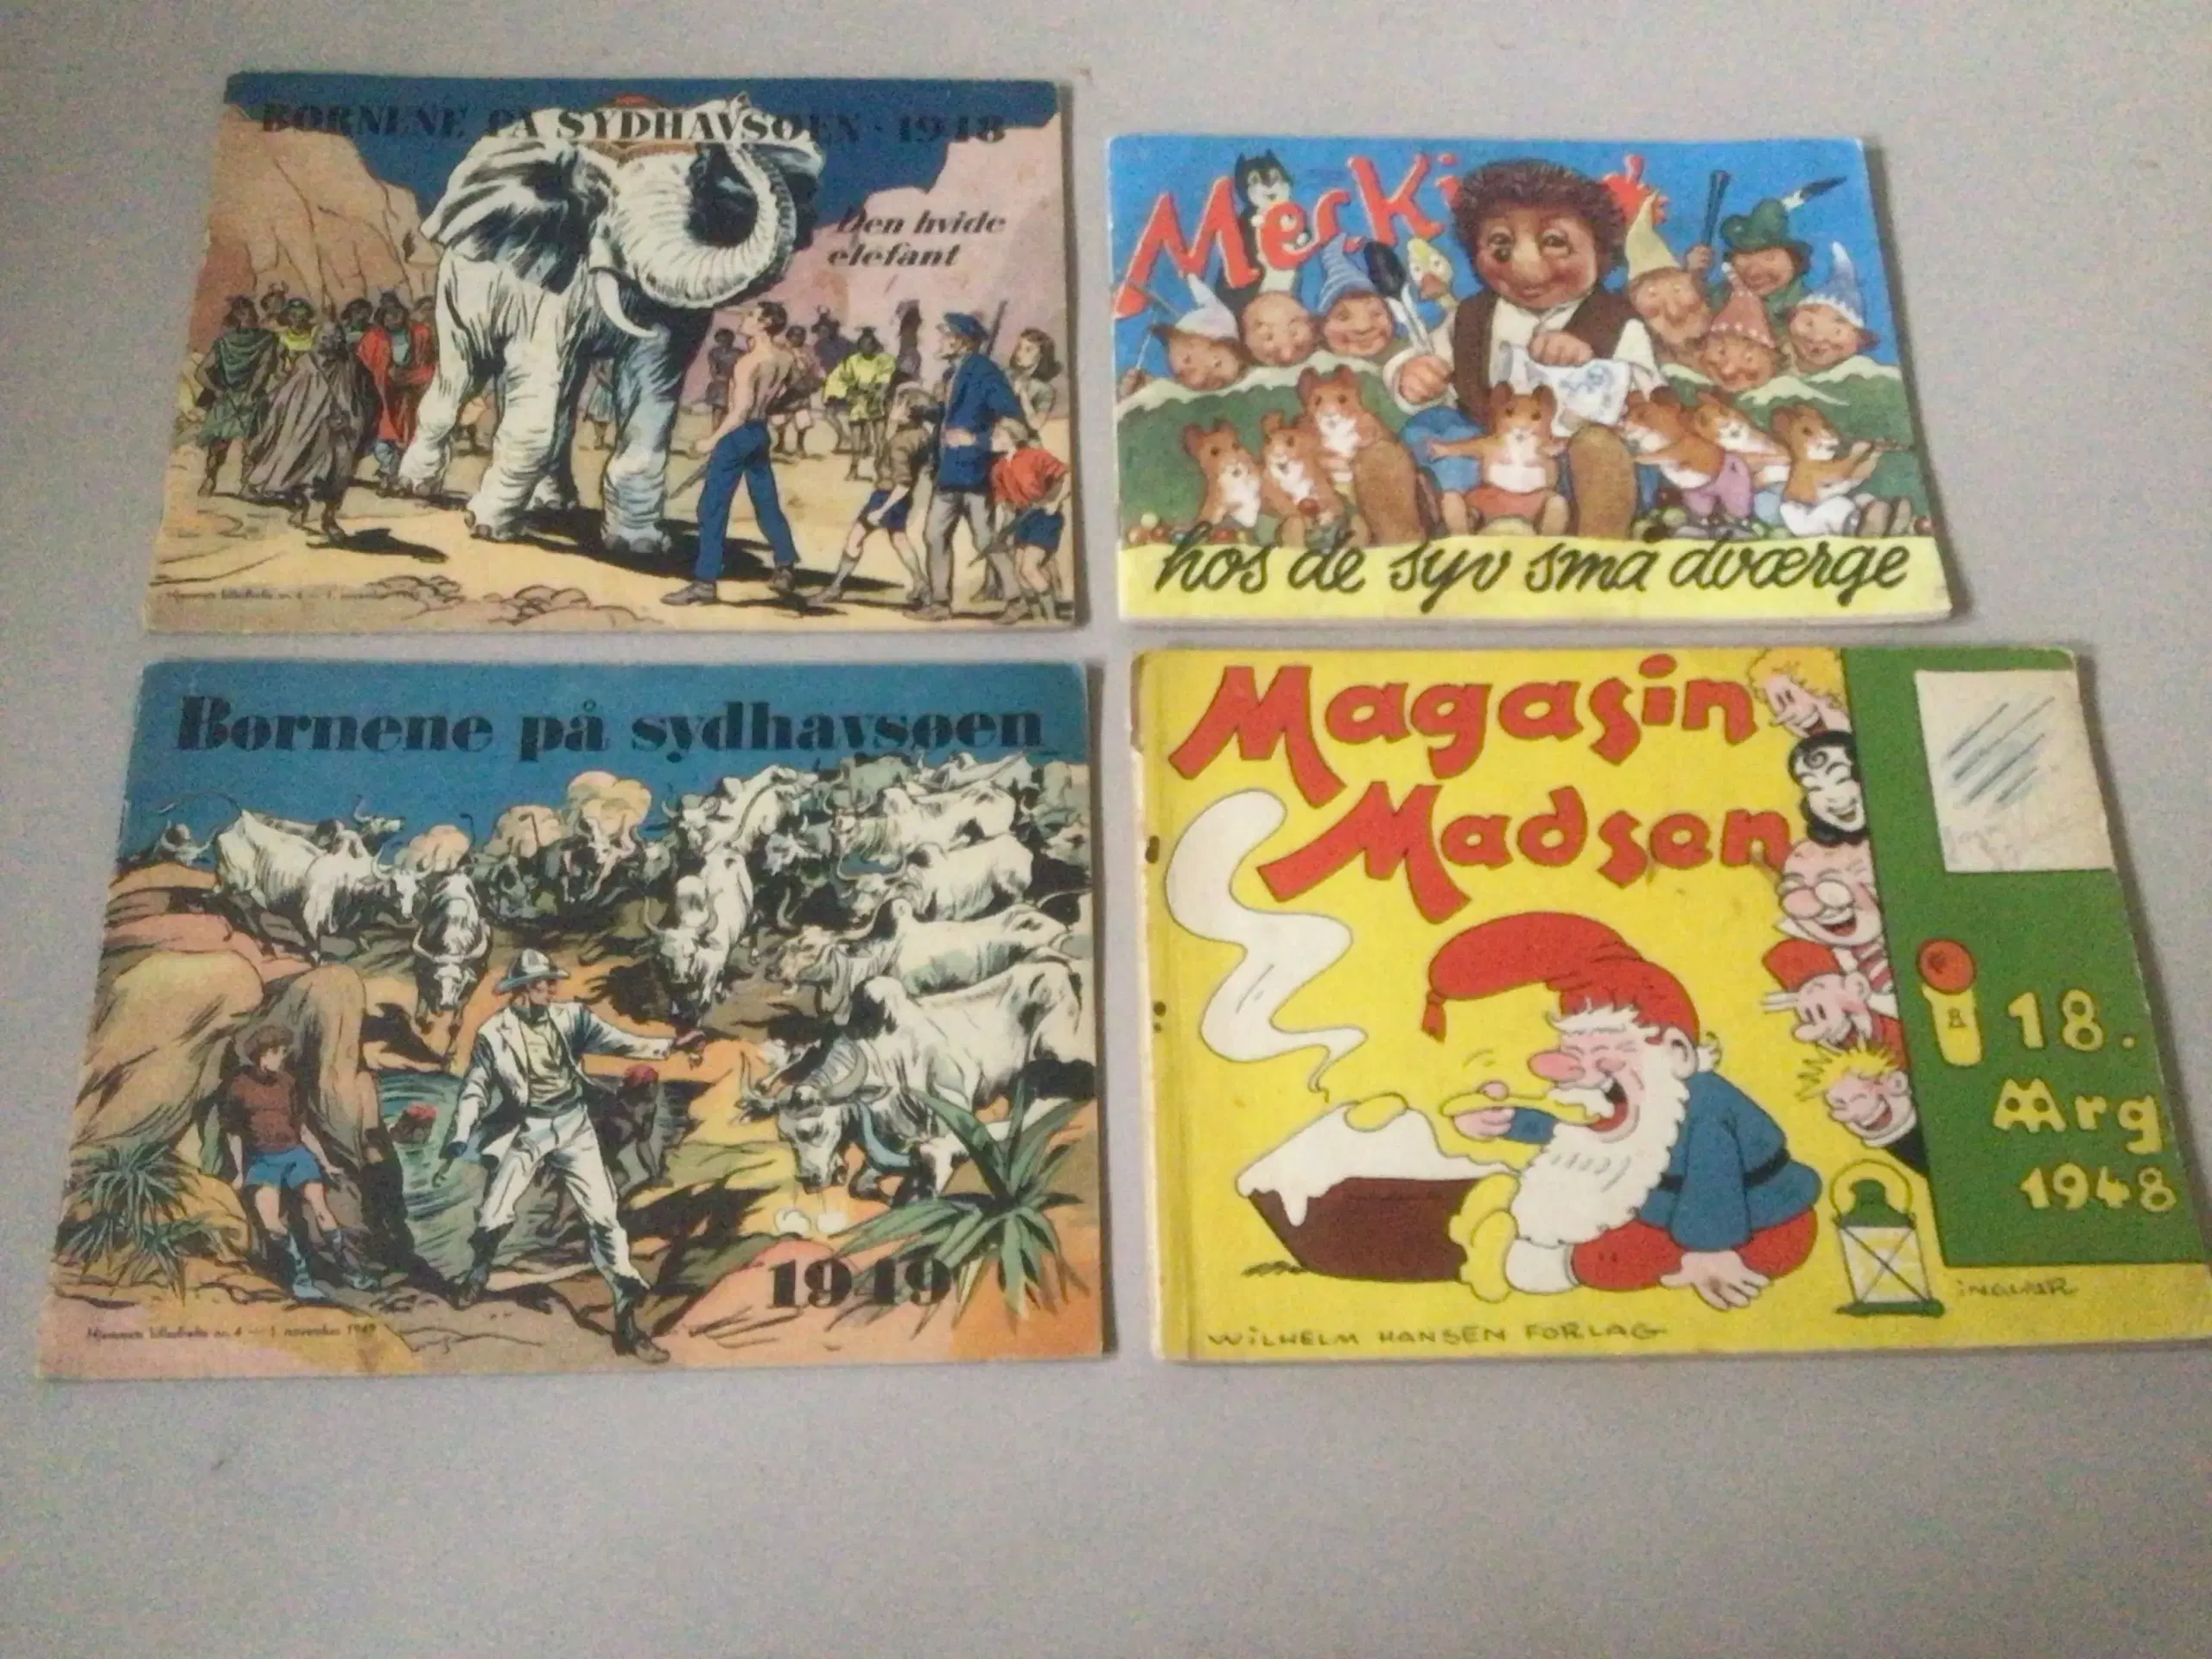 Tegneserier fra 1940’erne - 60’erne